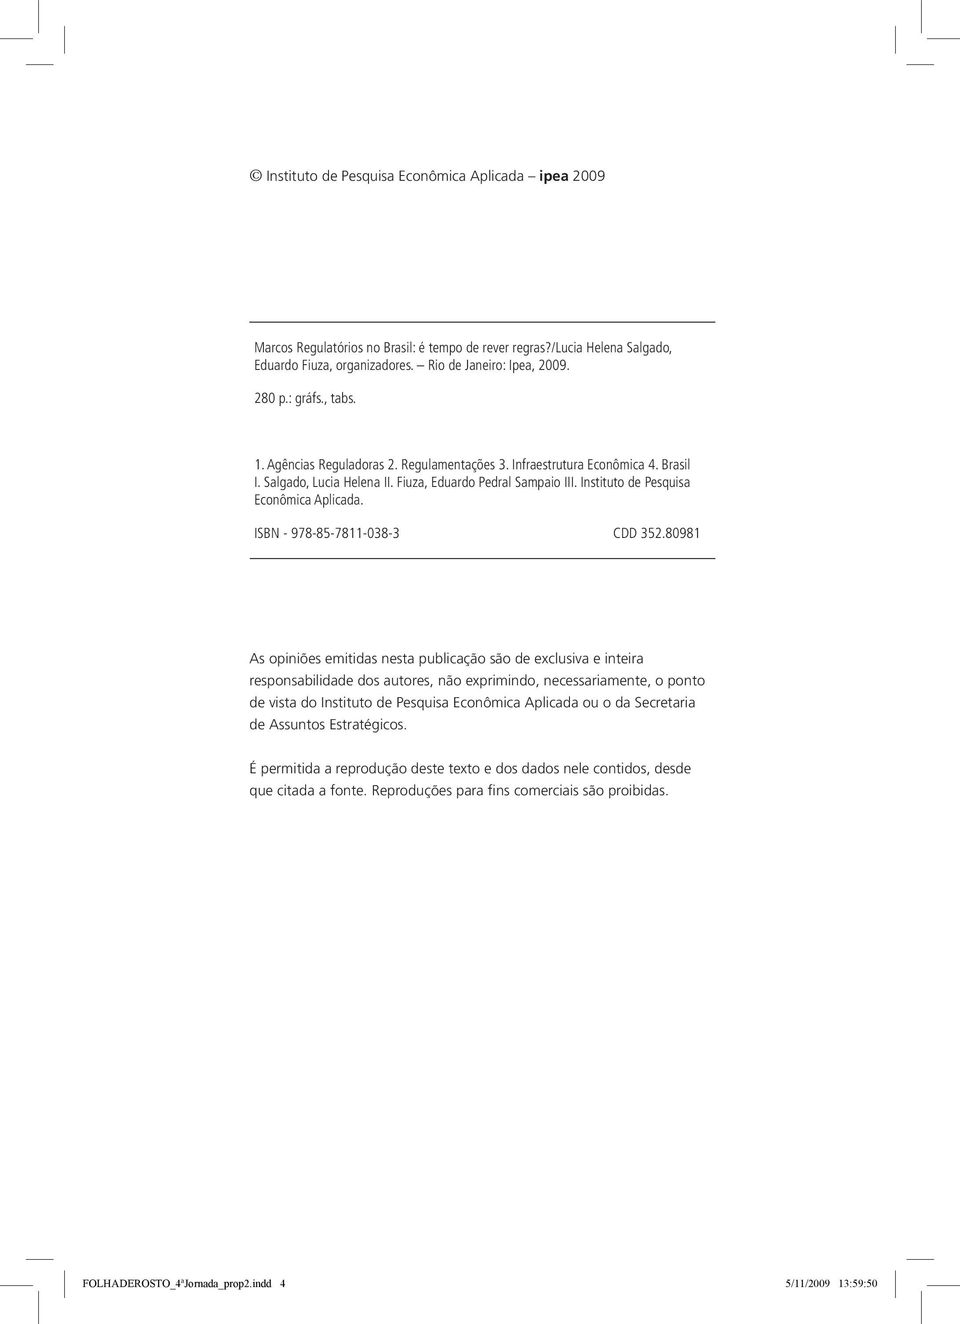 Instituto de Pesquisa Econômica Aplicada. ISBN - 978-85-7811-038-3 CDD 352.